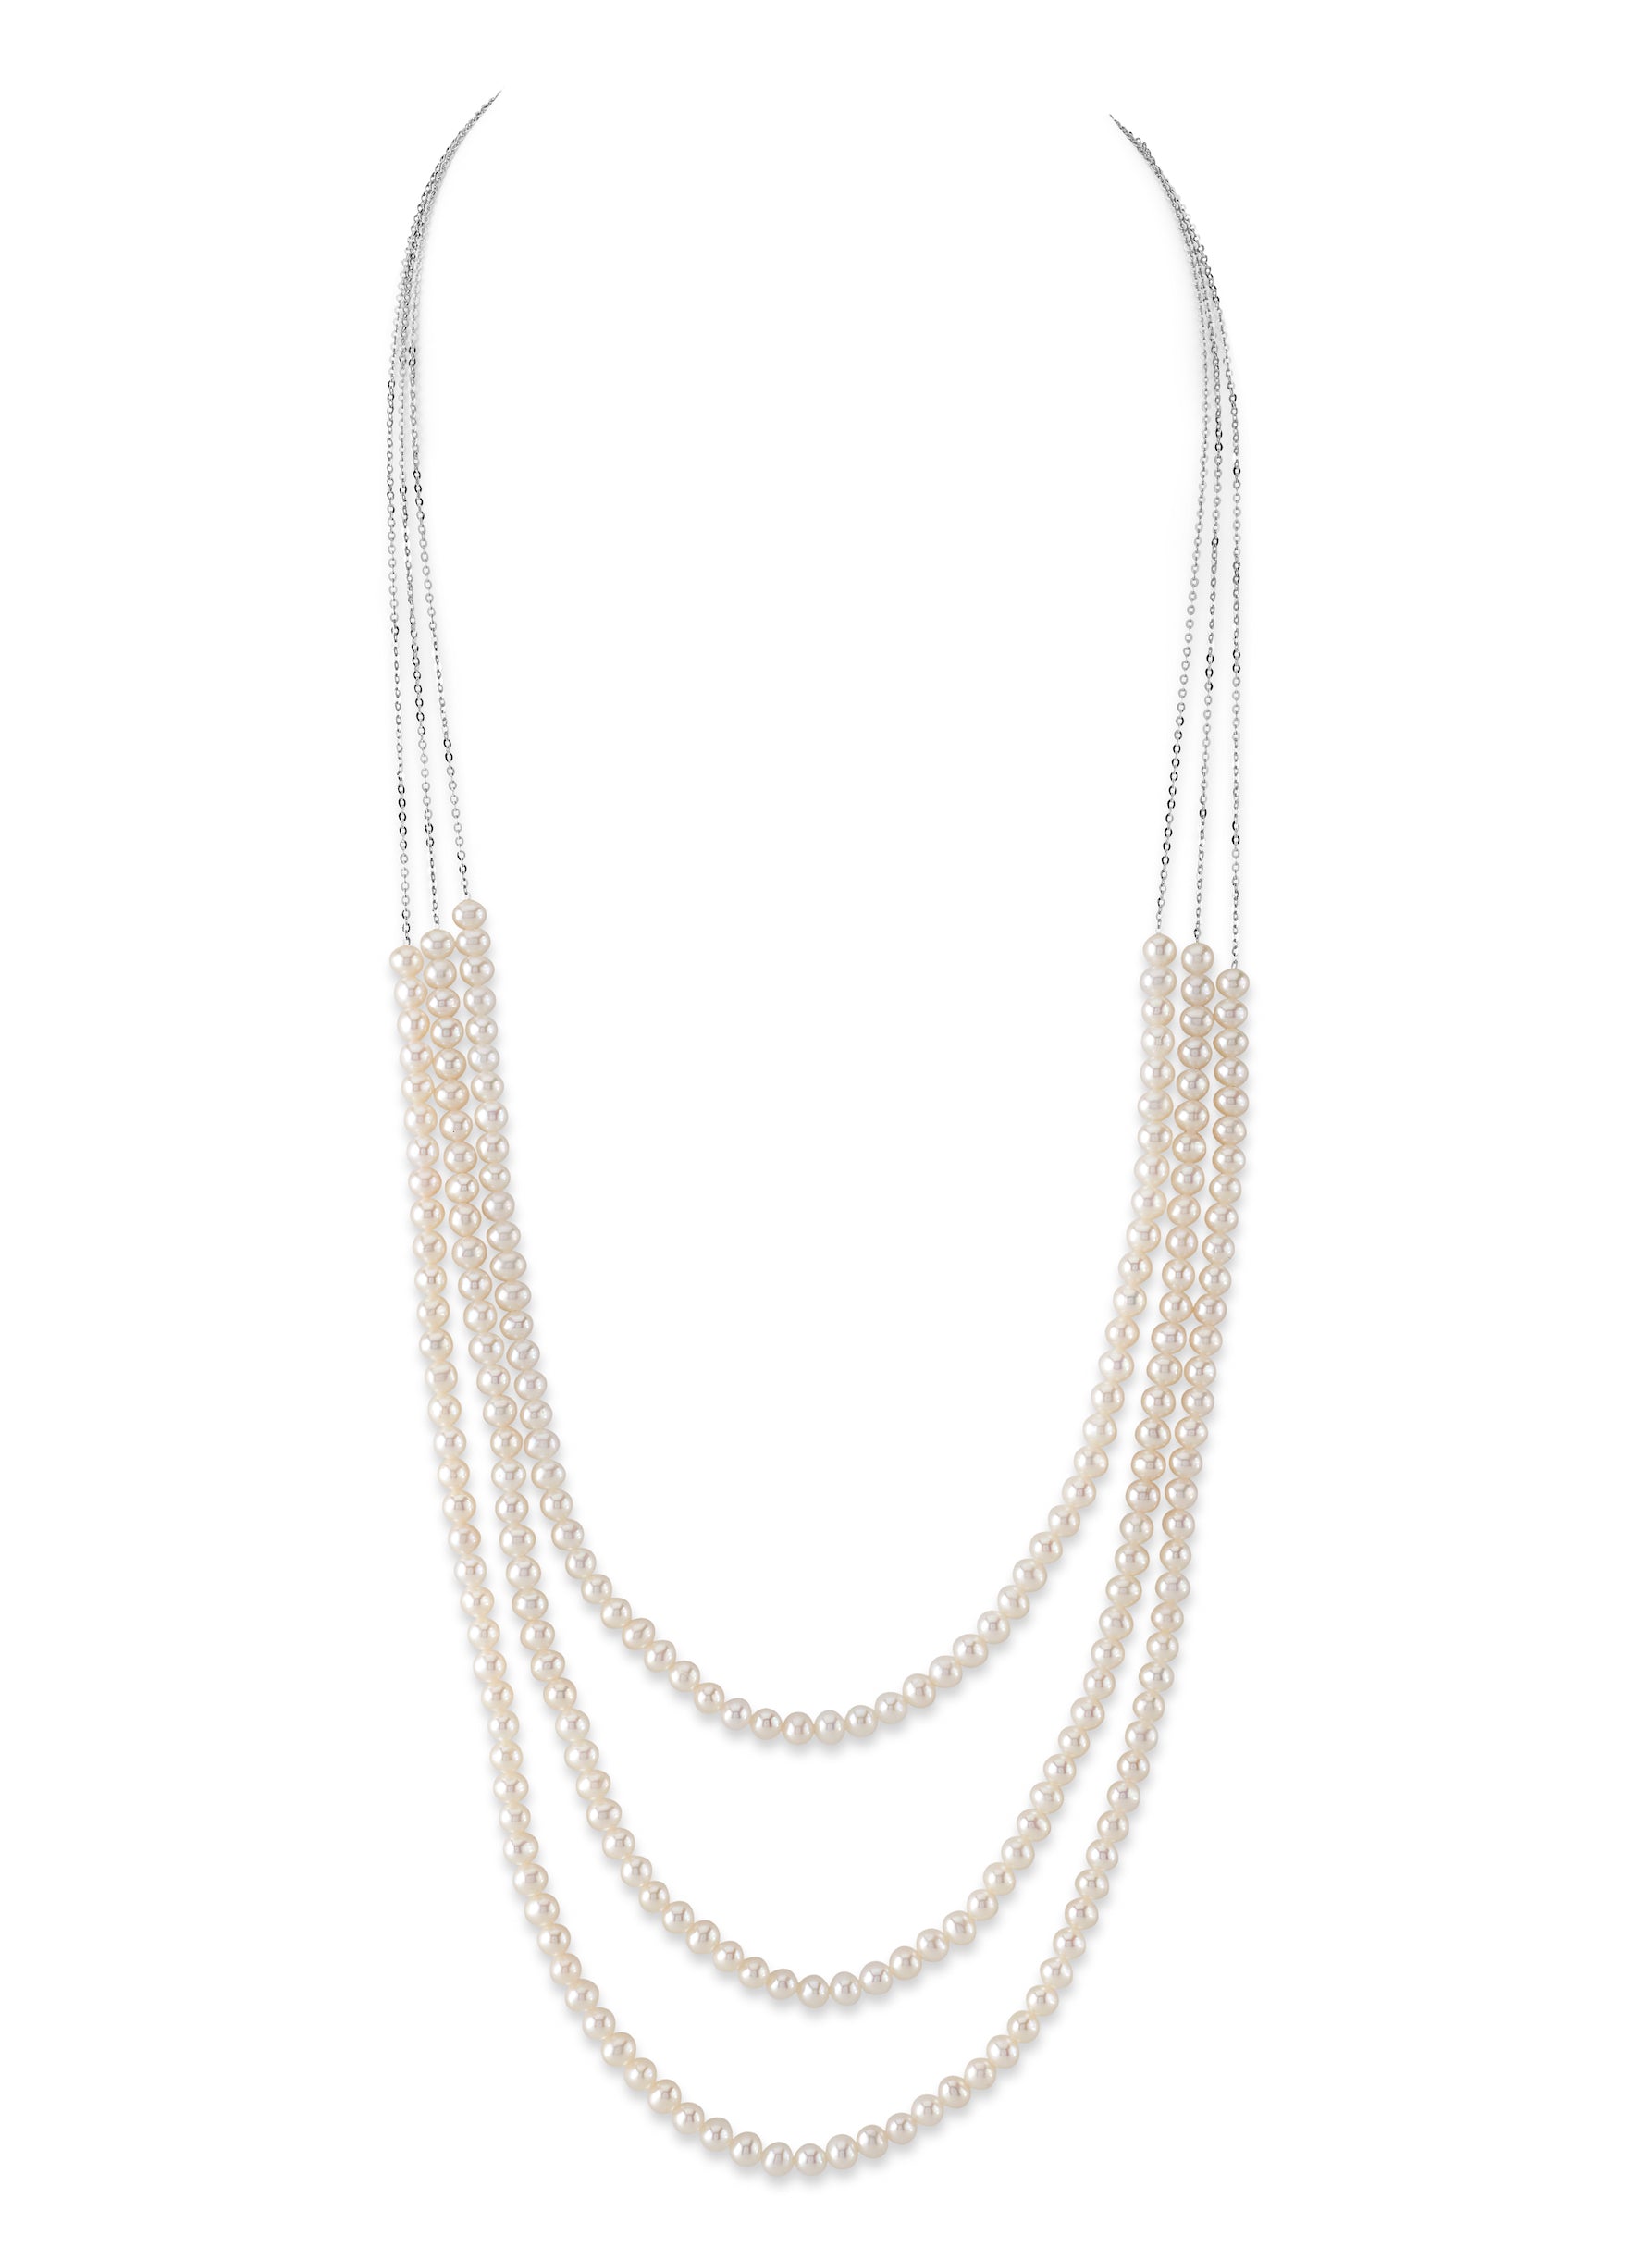 Mahavir Gold Plated Pearls Long Necklace Set